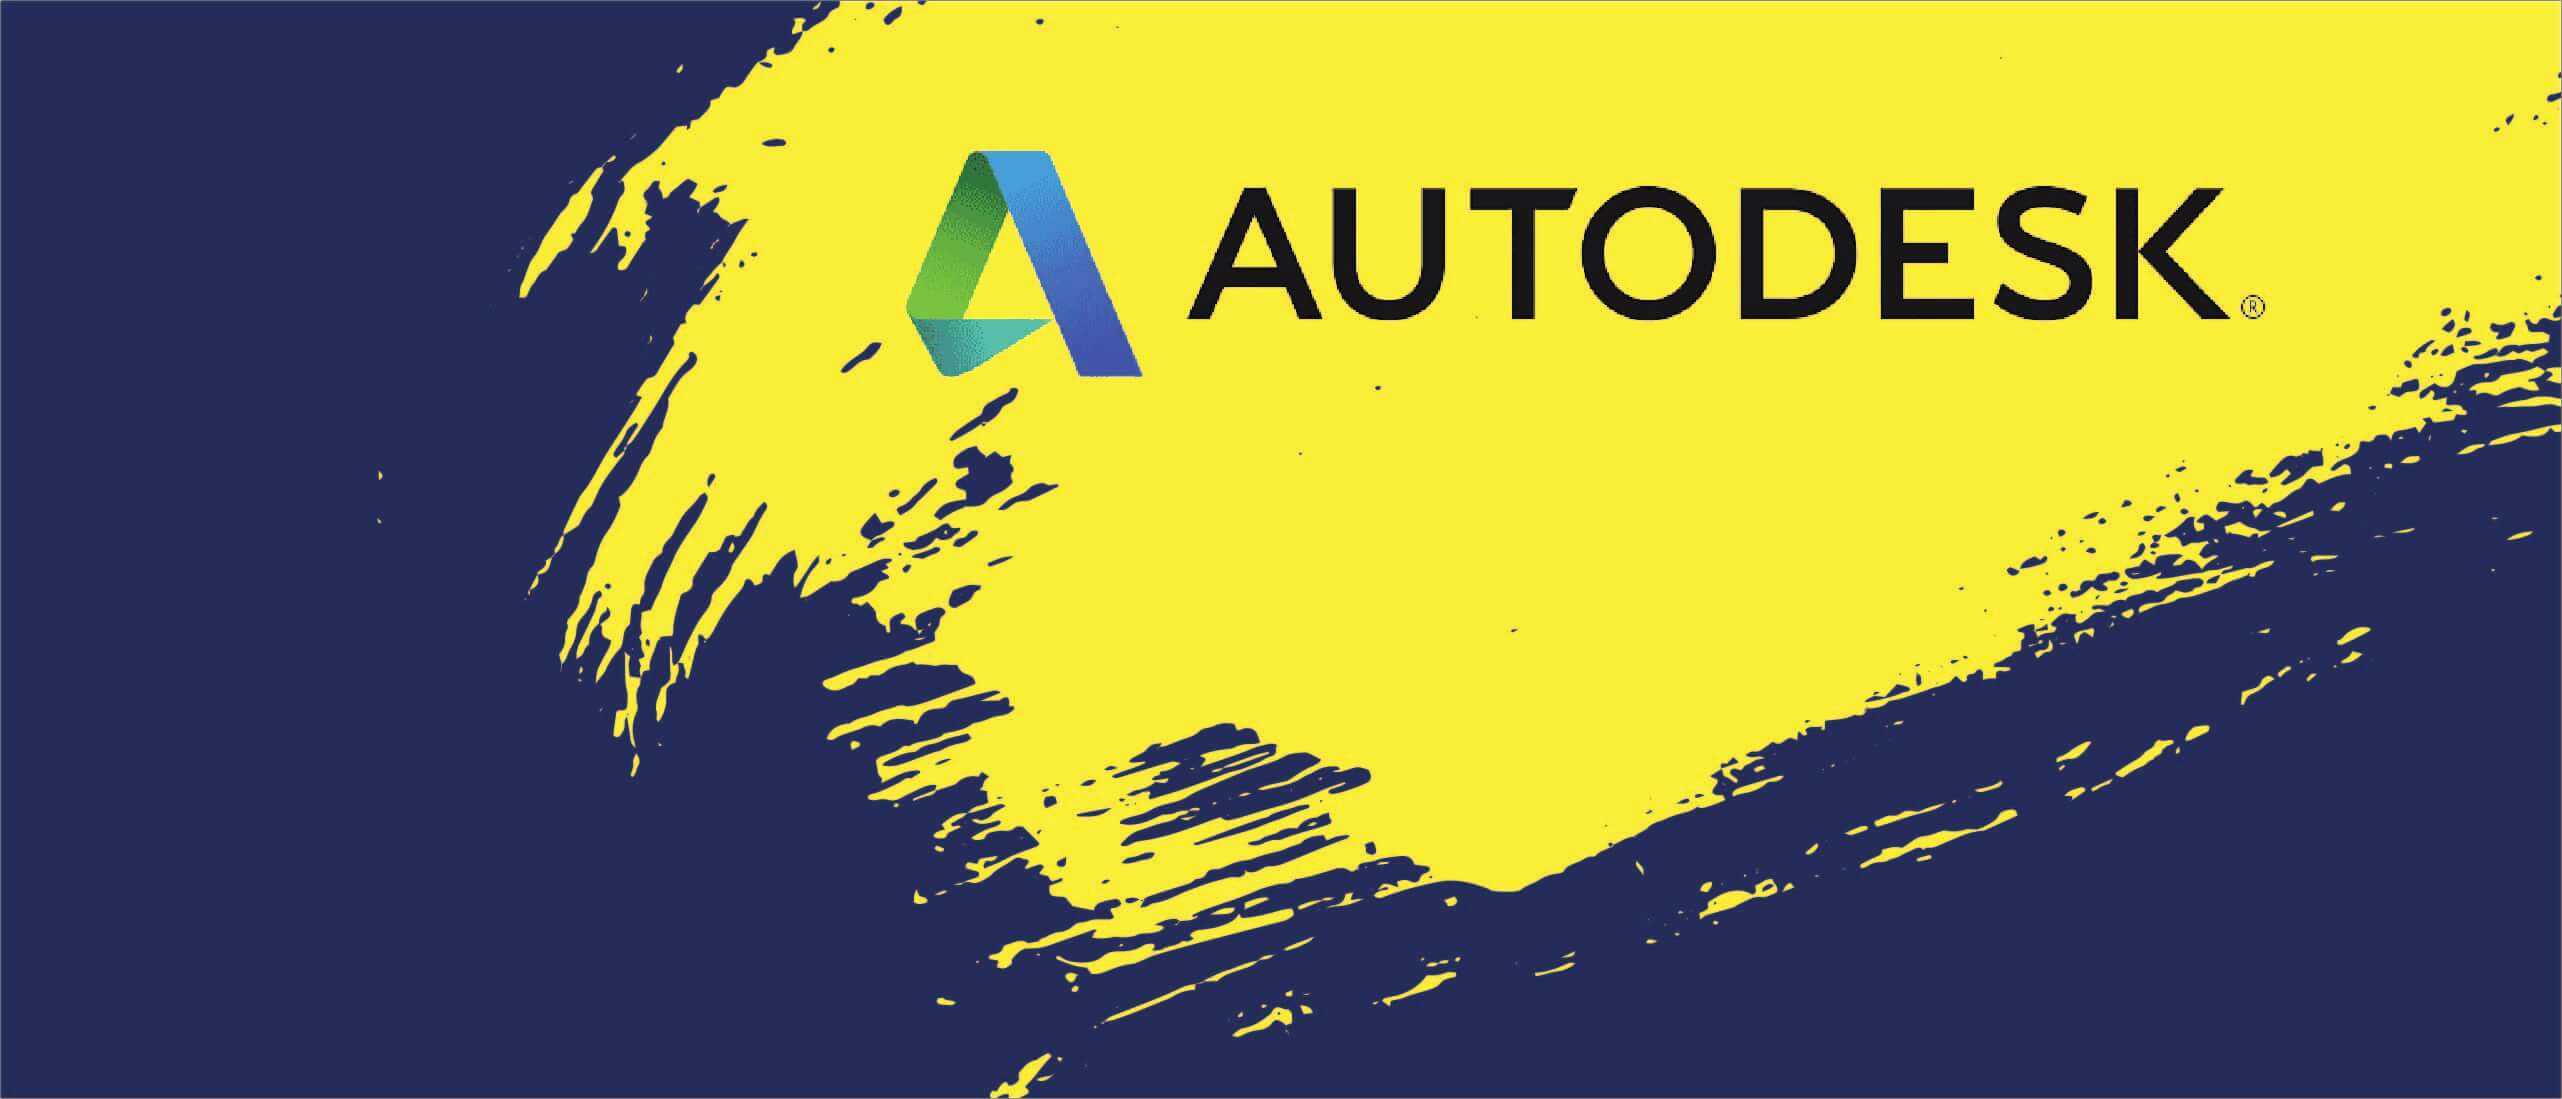 Tự tin thiết kế chi tiết 3D với Autodesk Inventor Professional